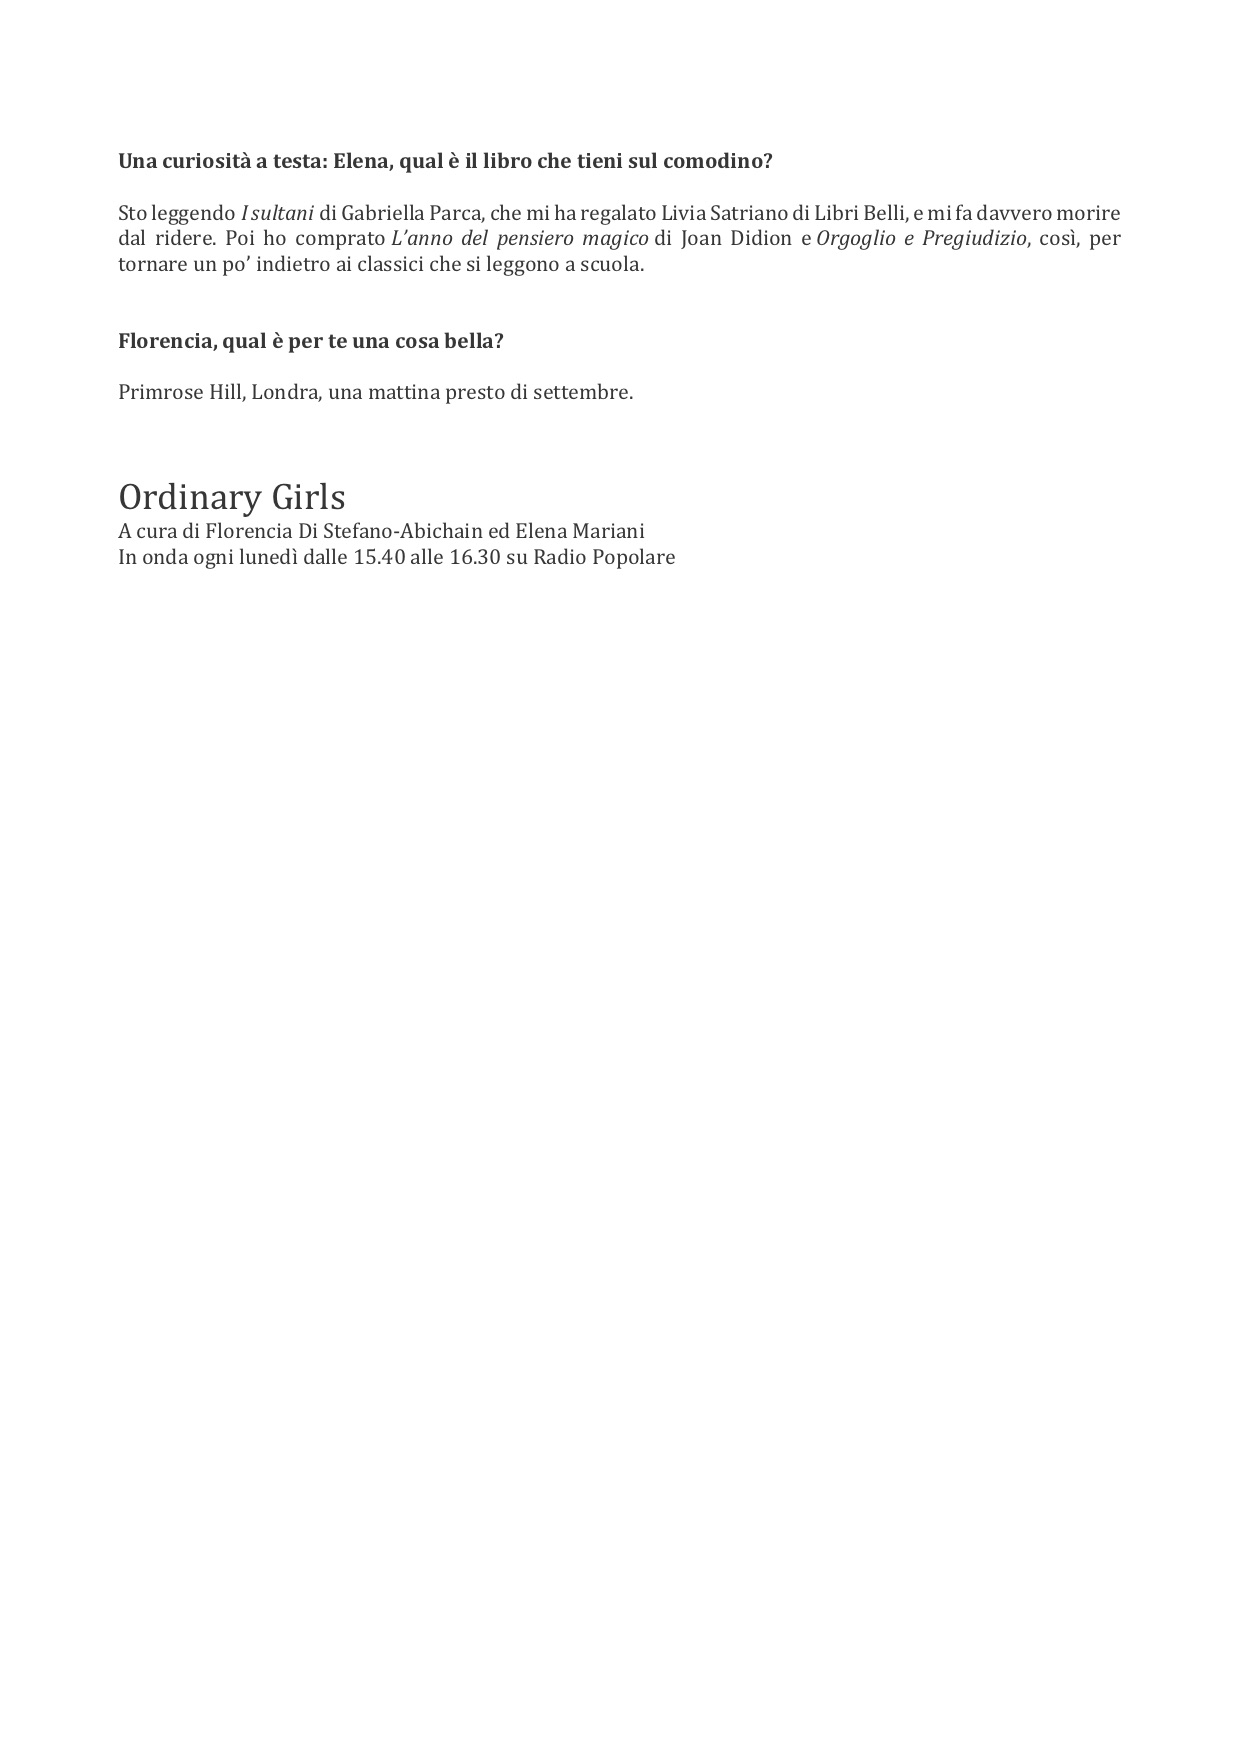 ORDINARY GIRLS_05